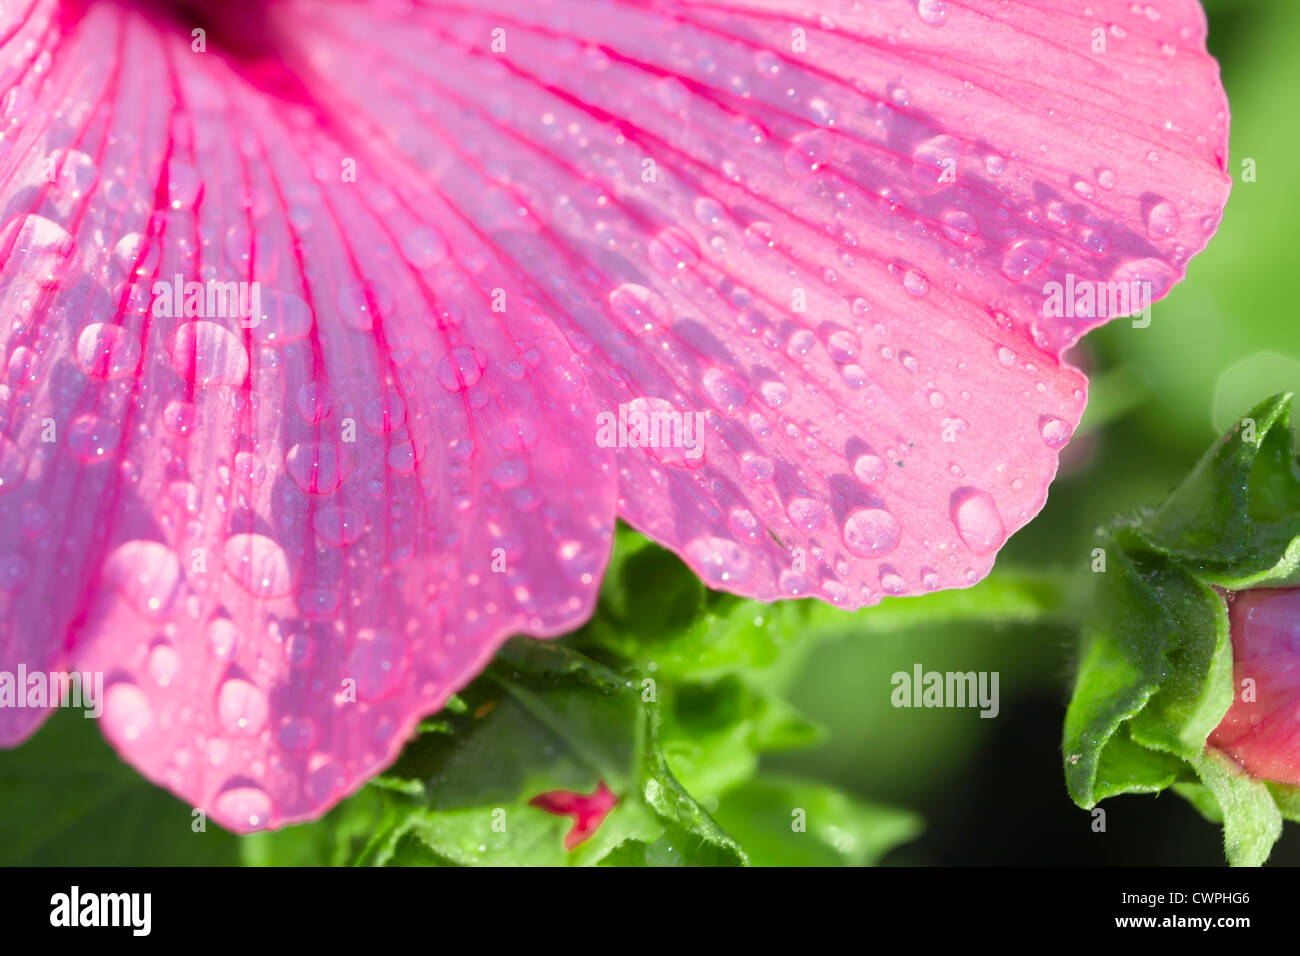 Rosa frische. Blumen Malve (Malva Neglecta) mit Morgentau. Stockfoto